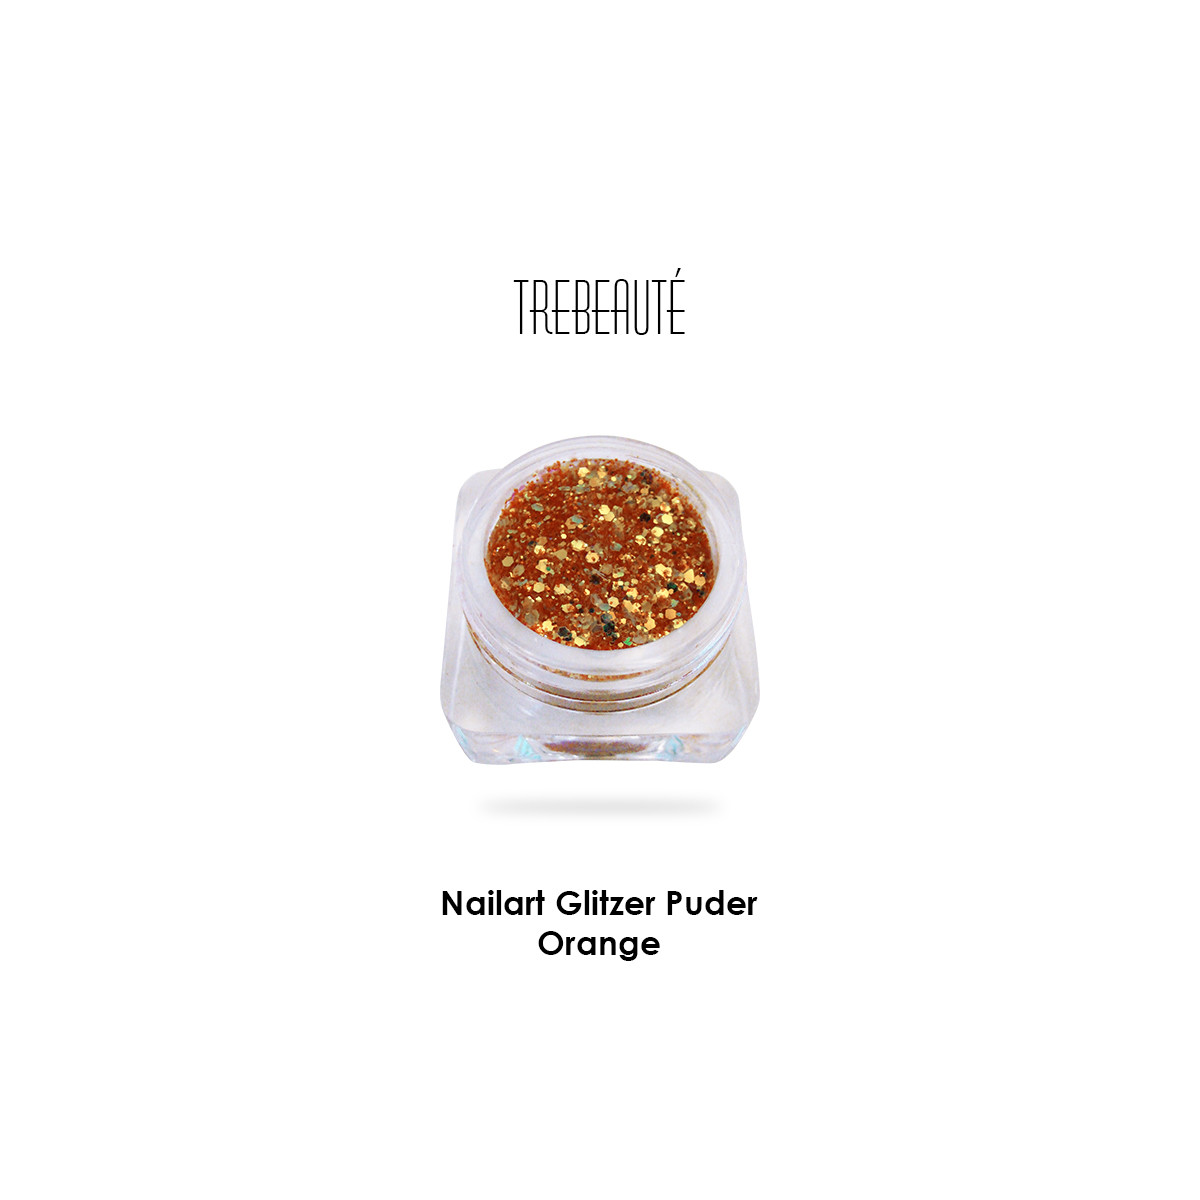 Nailart Glitzer Puder & Glitterstaub, Orange